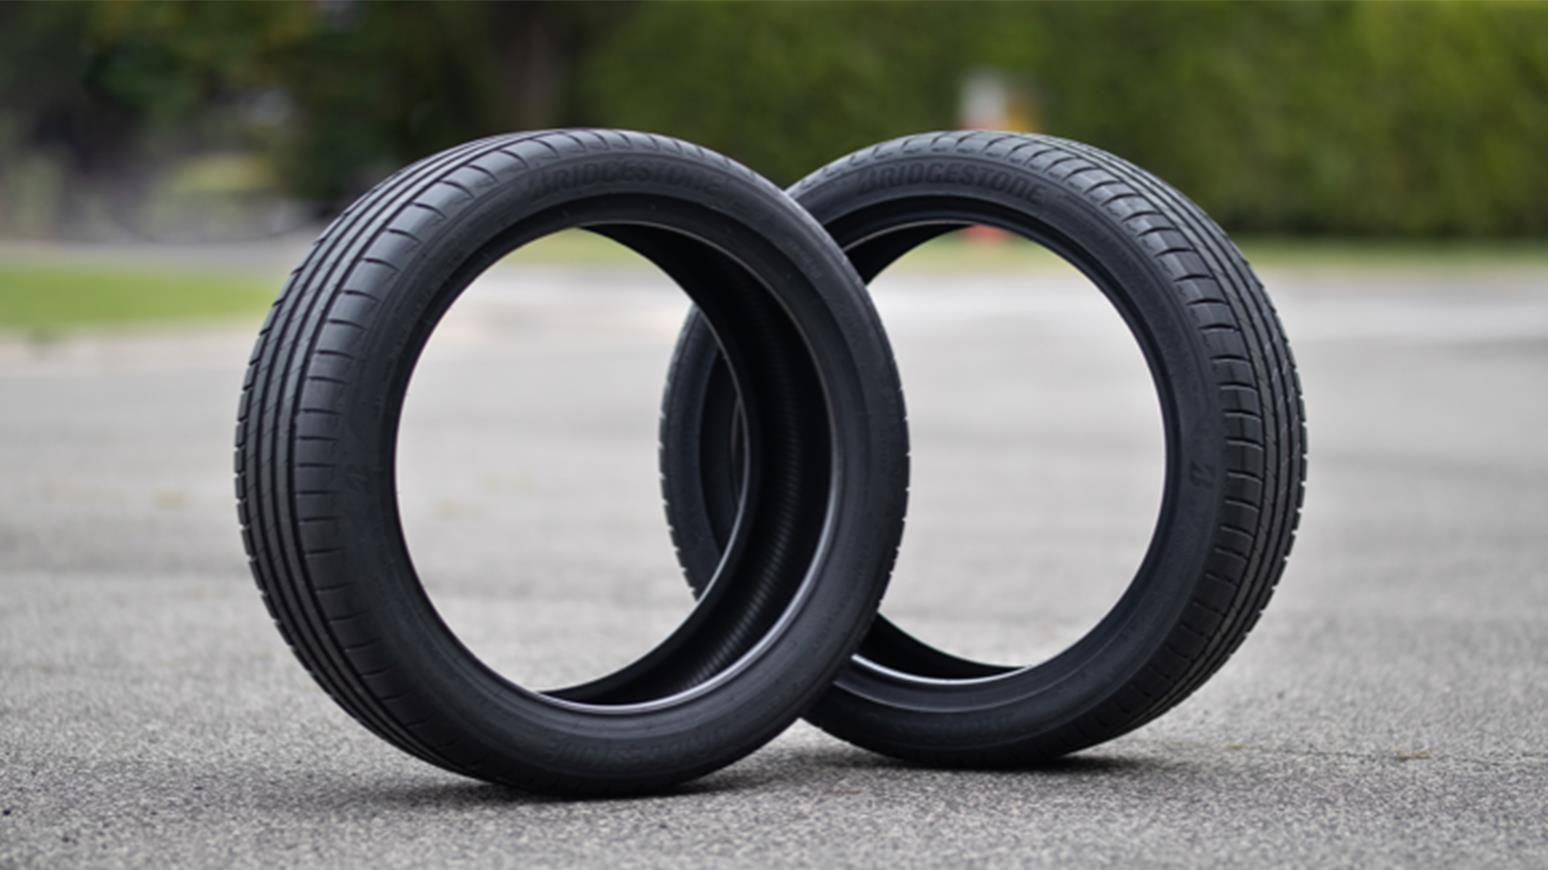 Bridgestone Announces New Enliten Tyre Technology That Reduces Tyre Weight, Rolling Resistance & CO2 Emissions